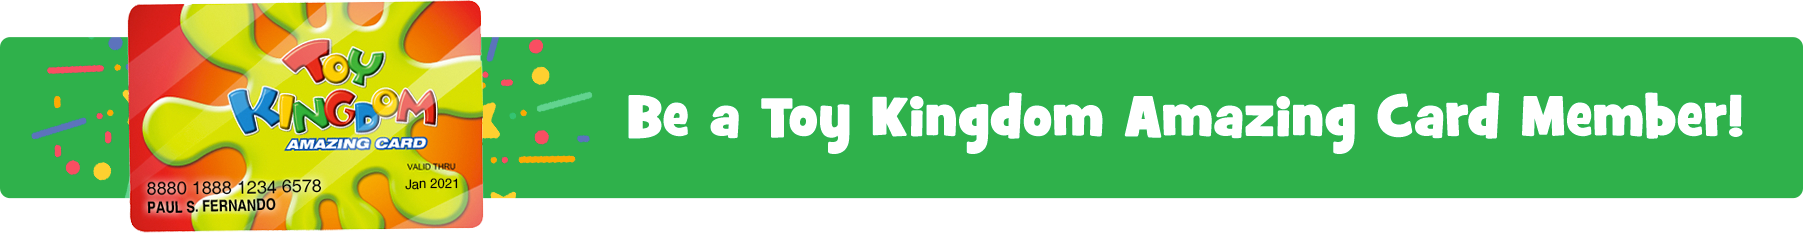 Toy Kingdom Amazing Card Member